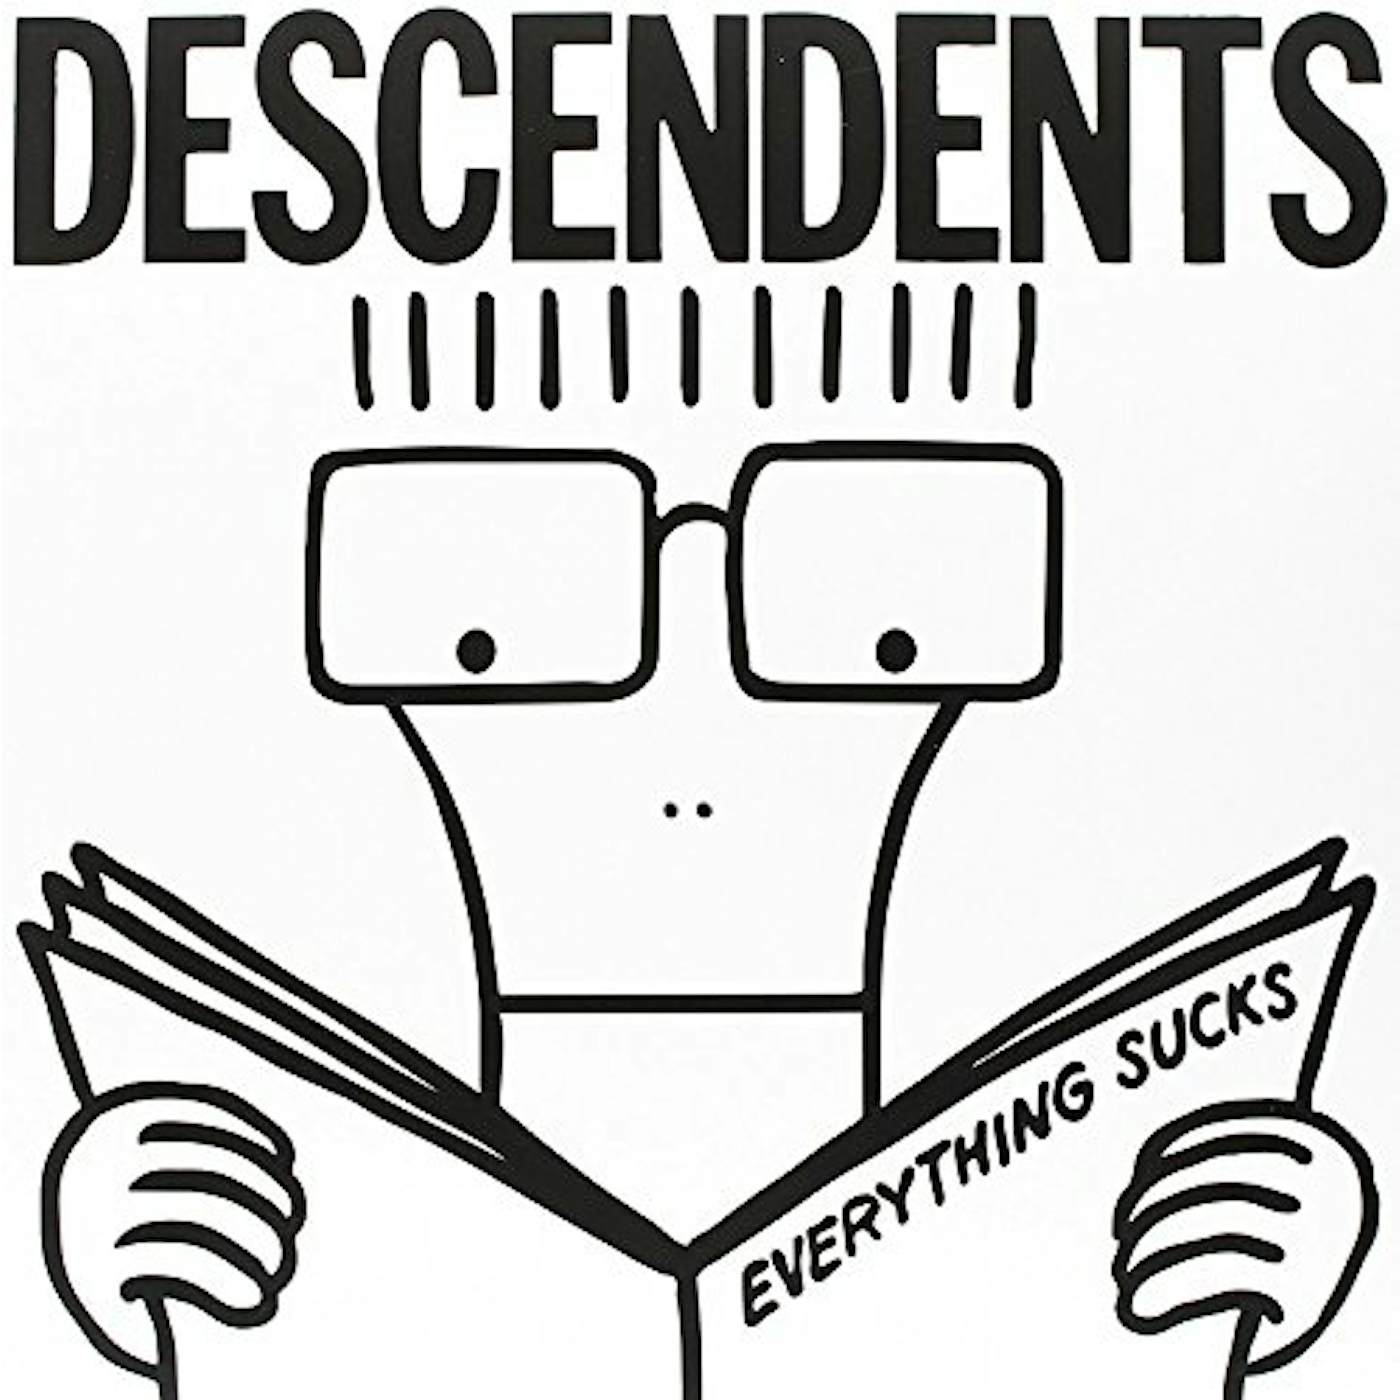 Descendents Everything Sucks Vinyl Record